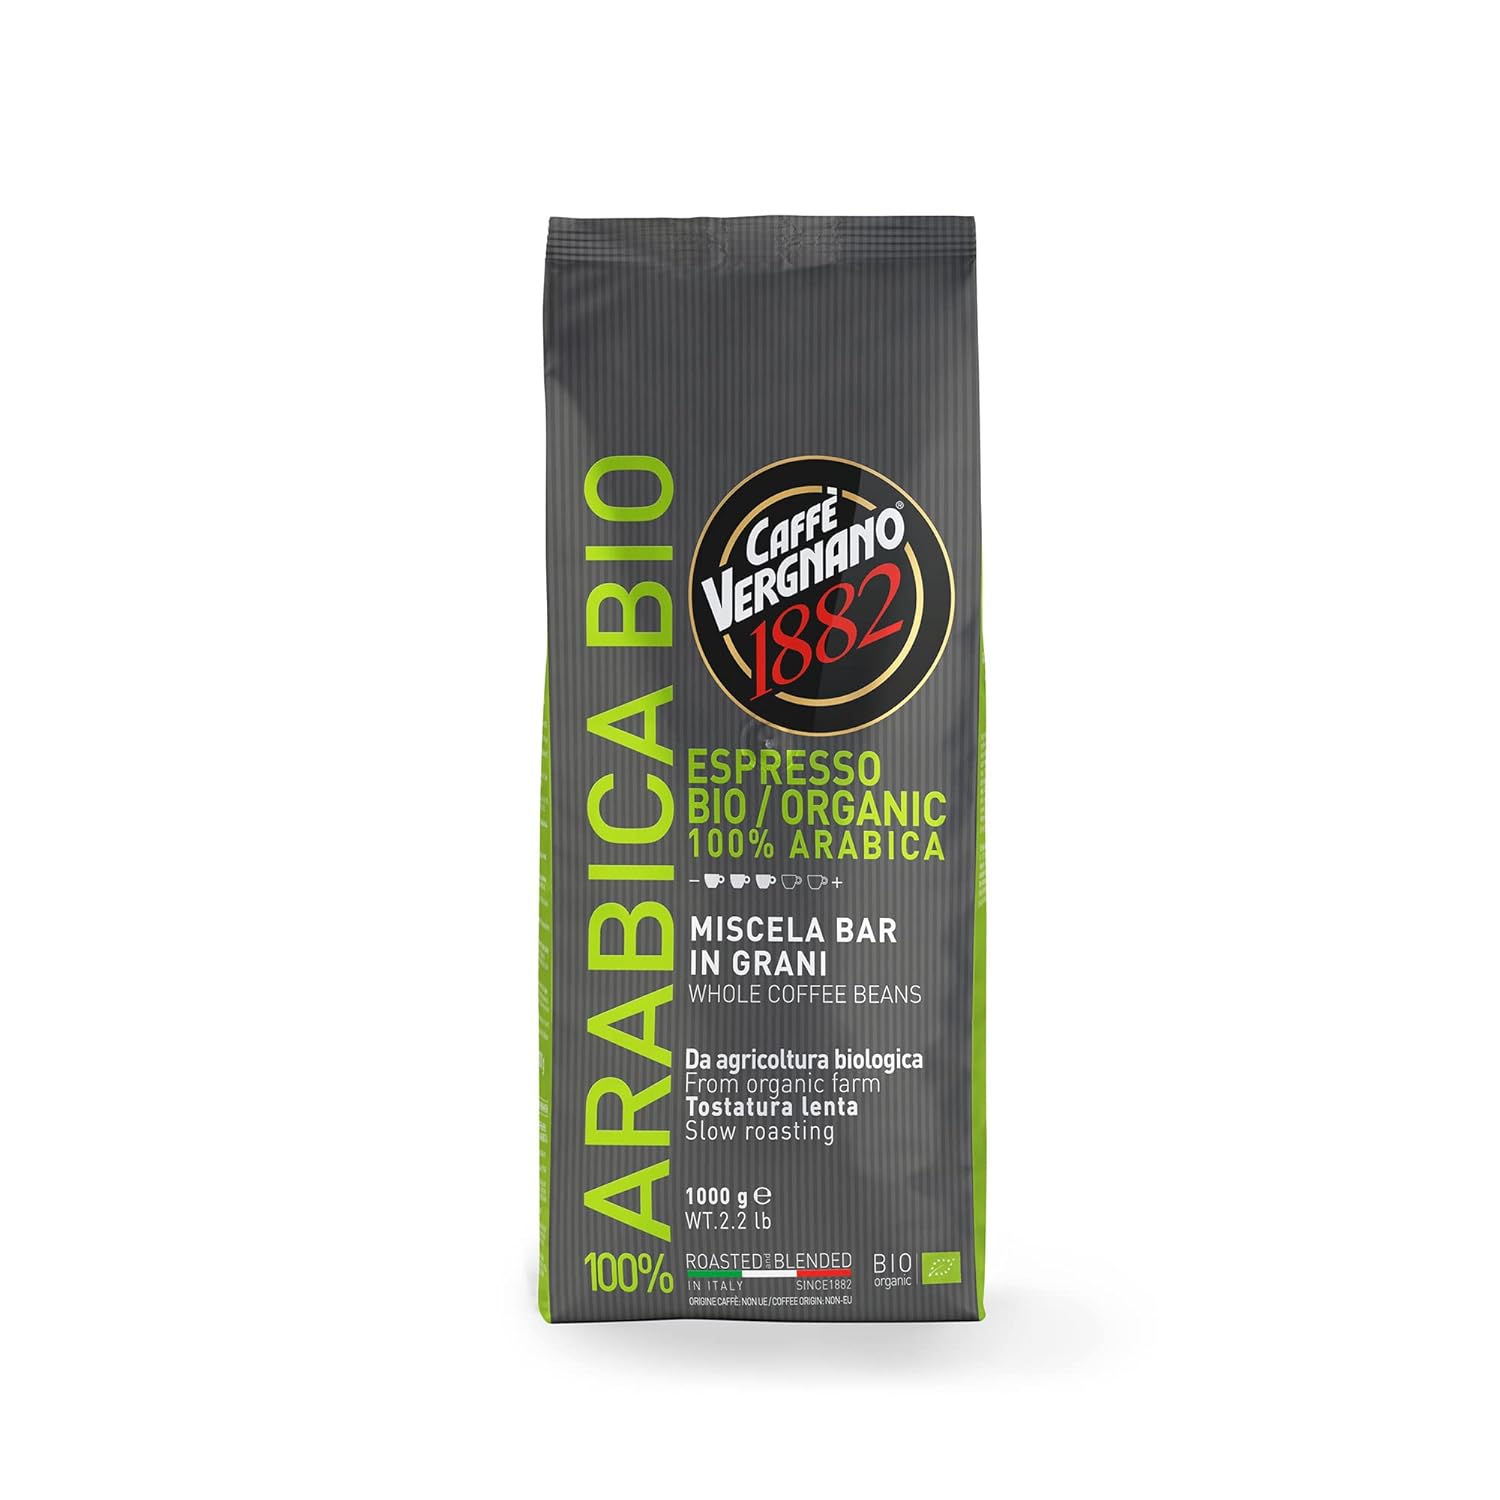 Caffè Vergnano 1882 Coffee Beans 100% Arabica Organic - 1 Pack Contains 1 kg